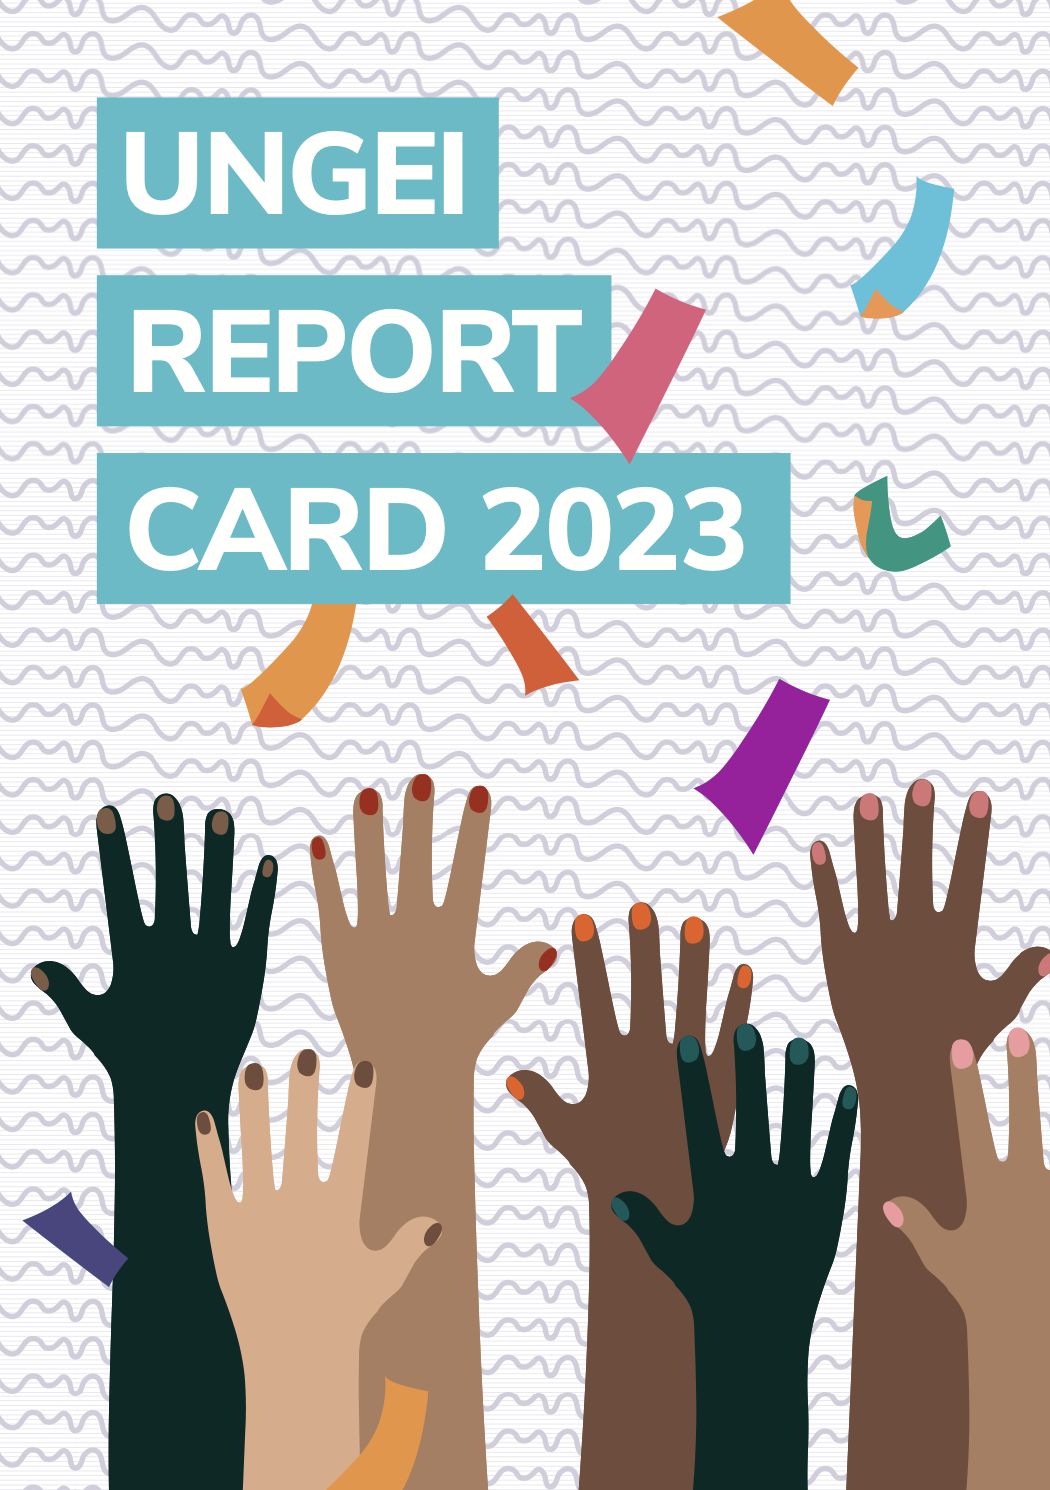 UNGEI Report Card 2023